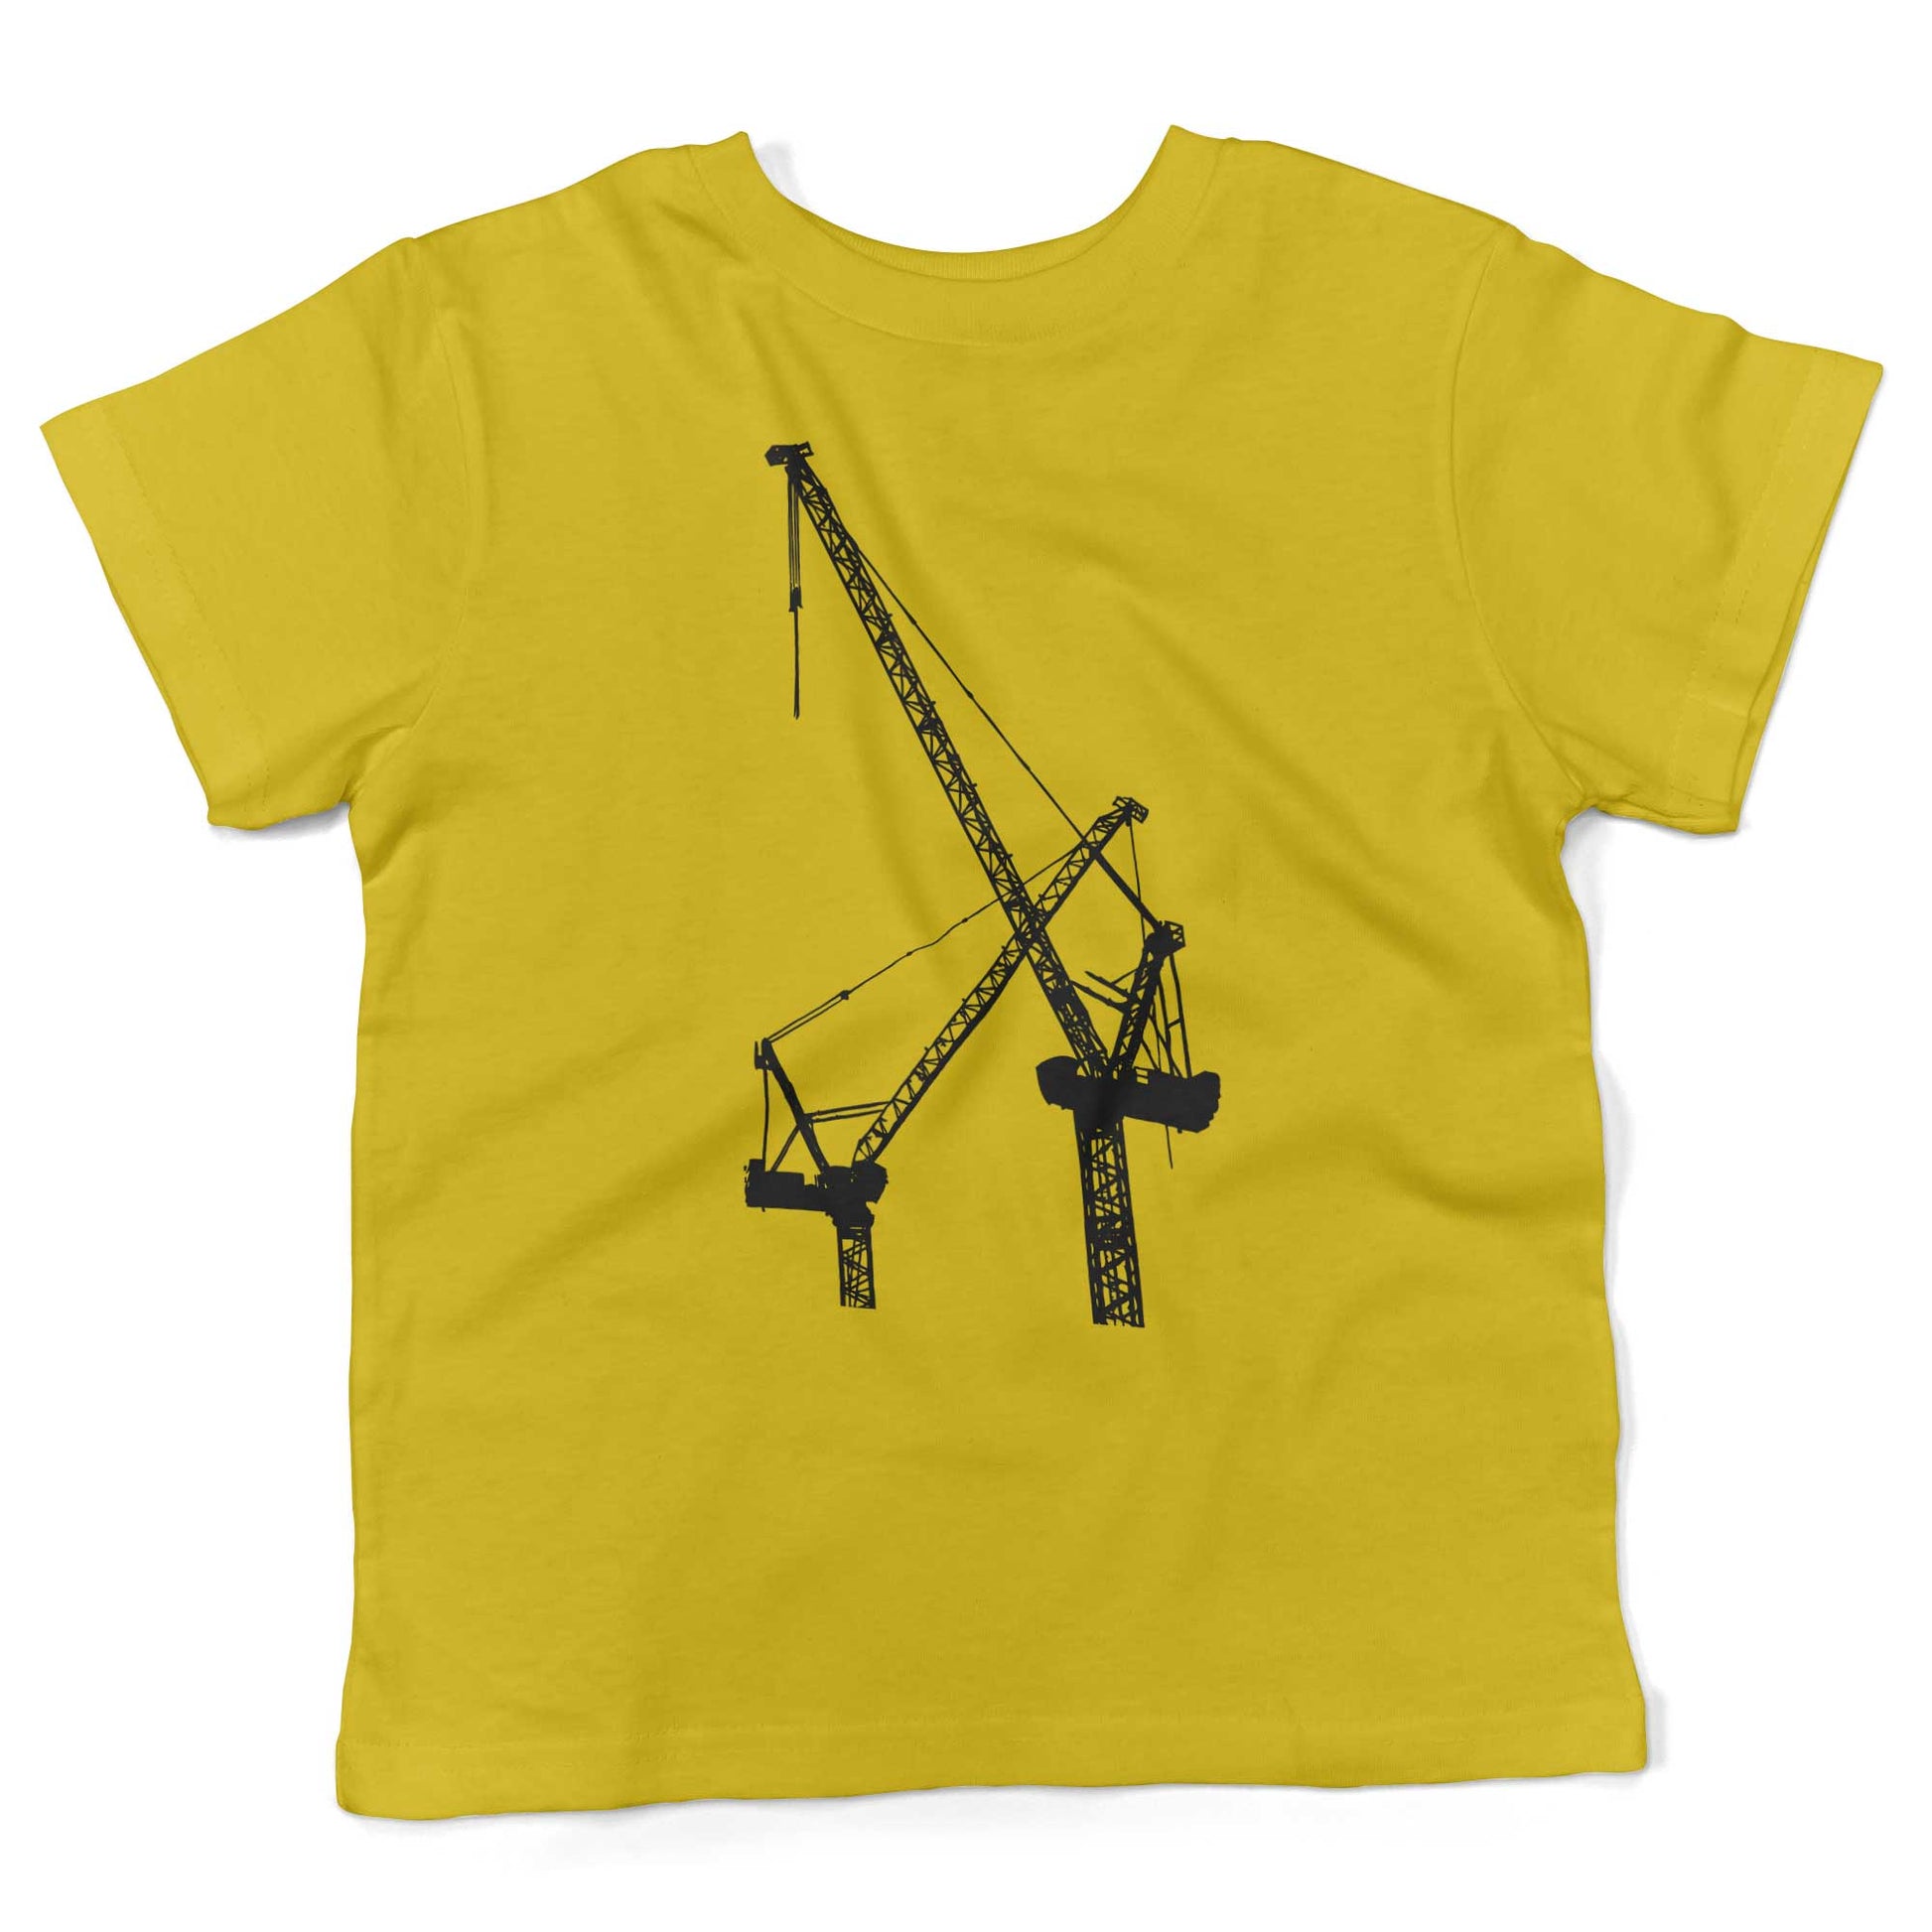 Construction Cranes Toddler Shirt-Sunshine Yellow-2T